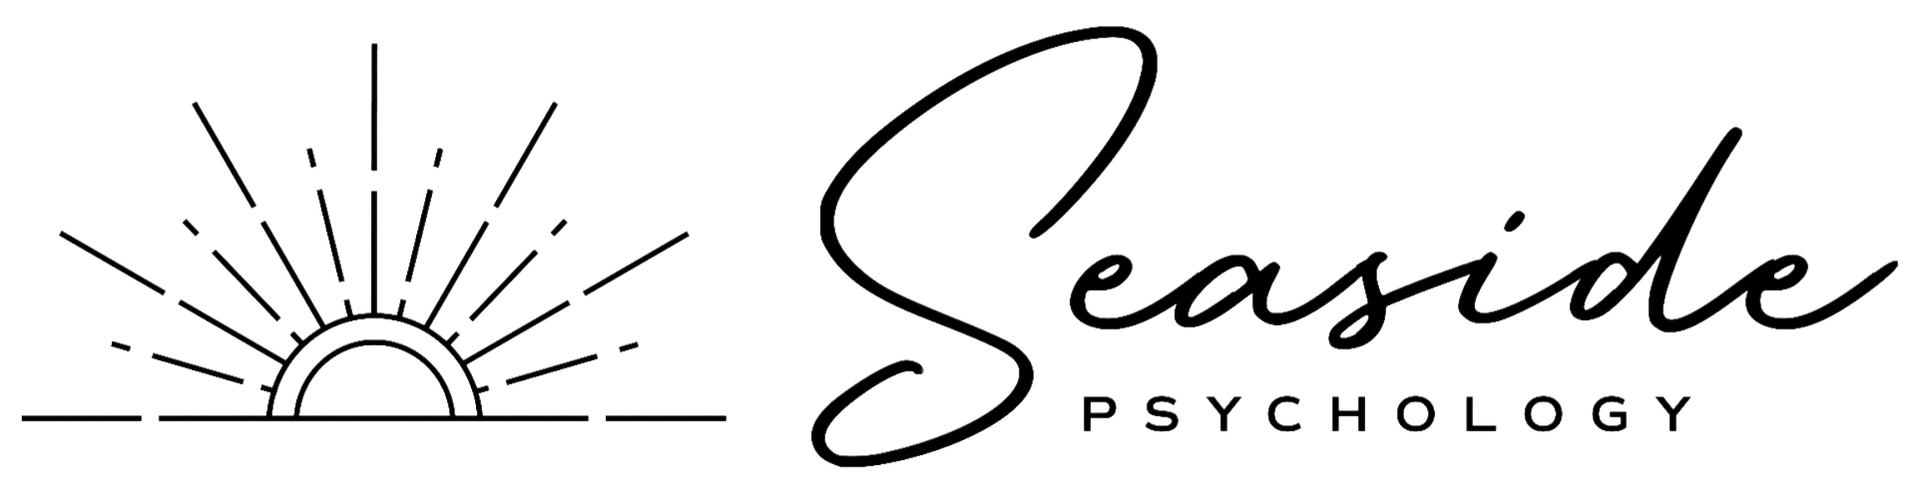 Seaside Psychology logo